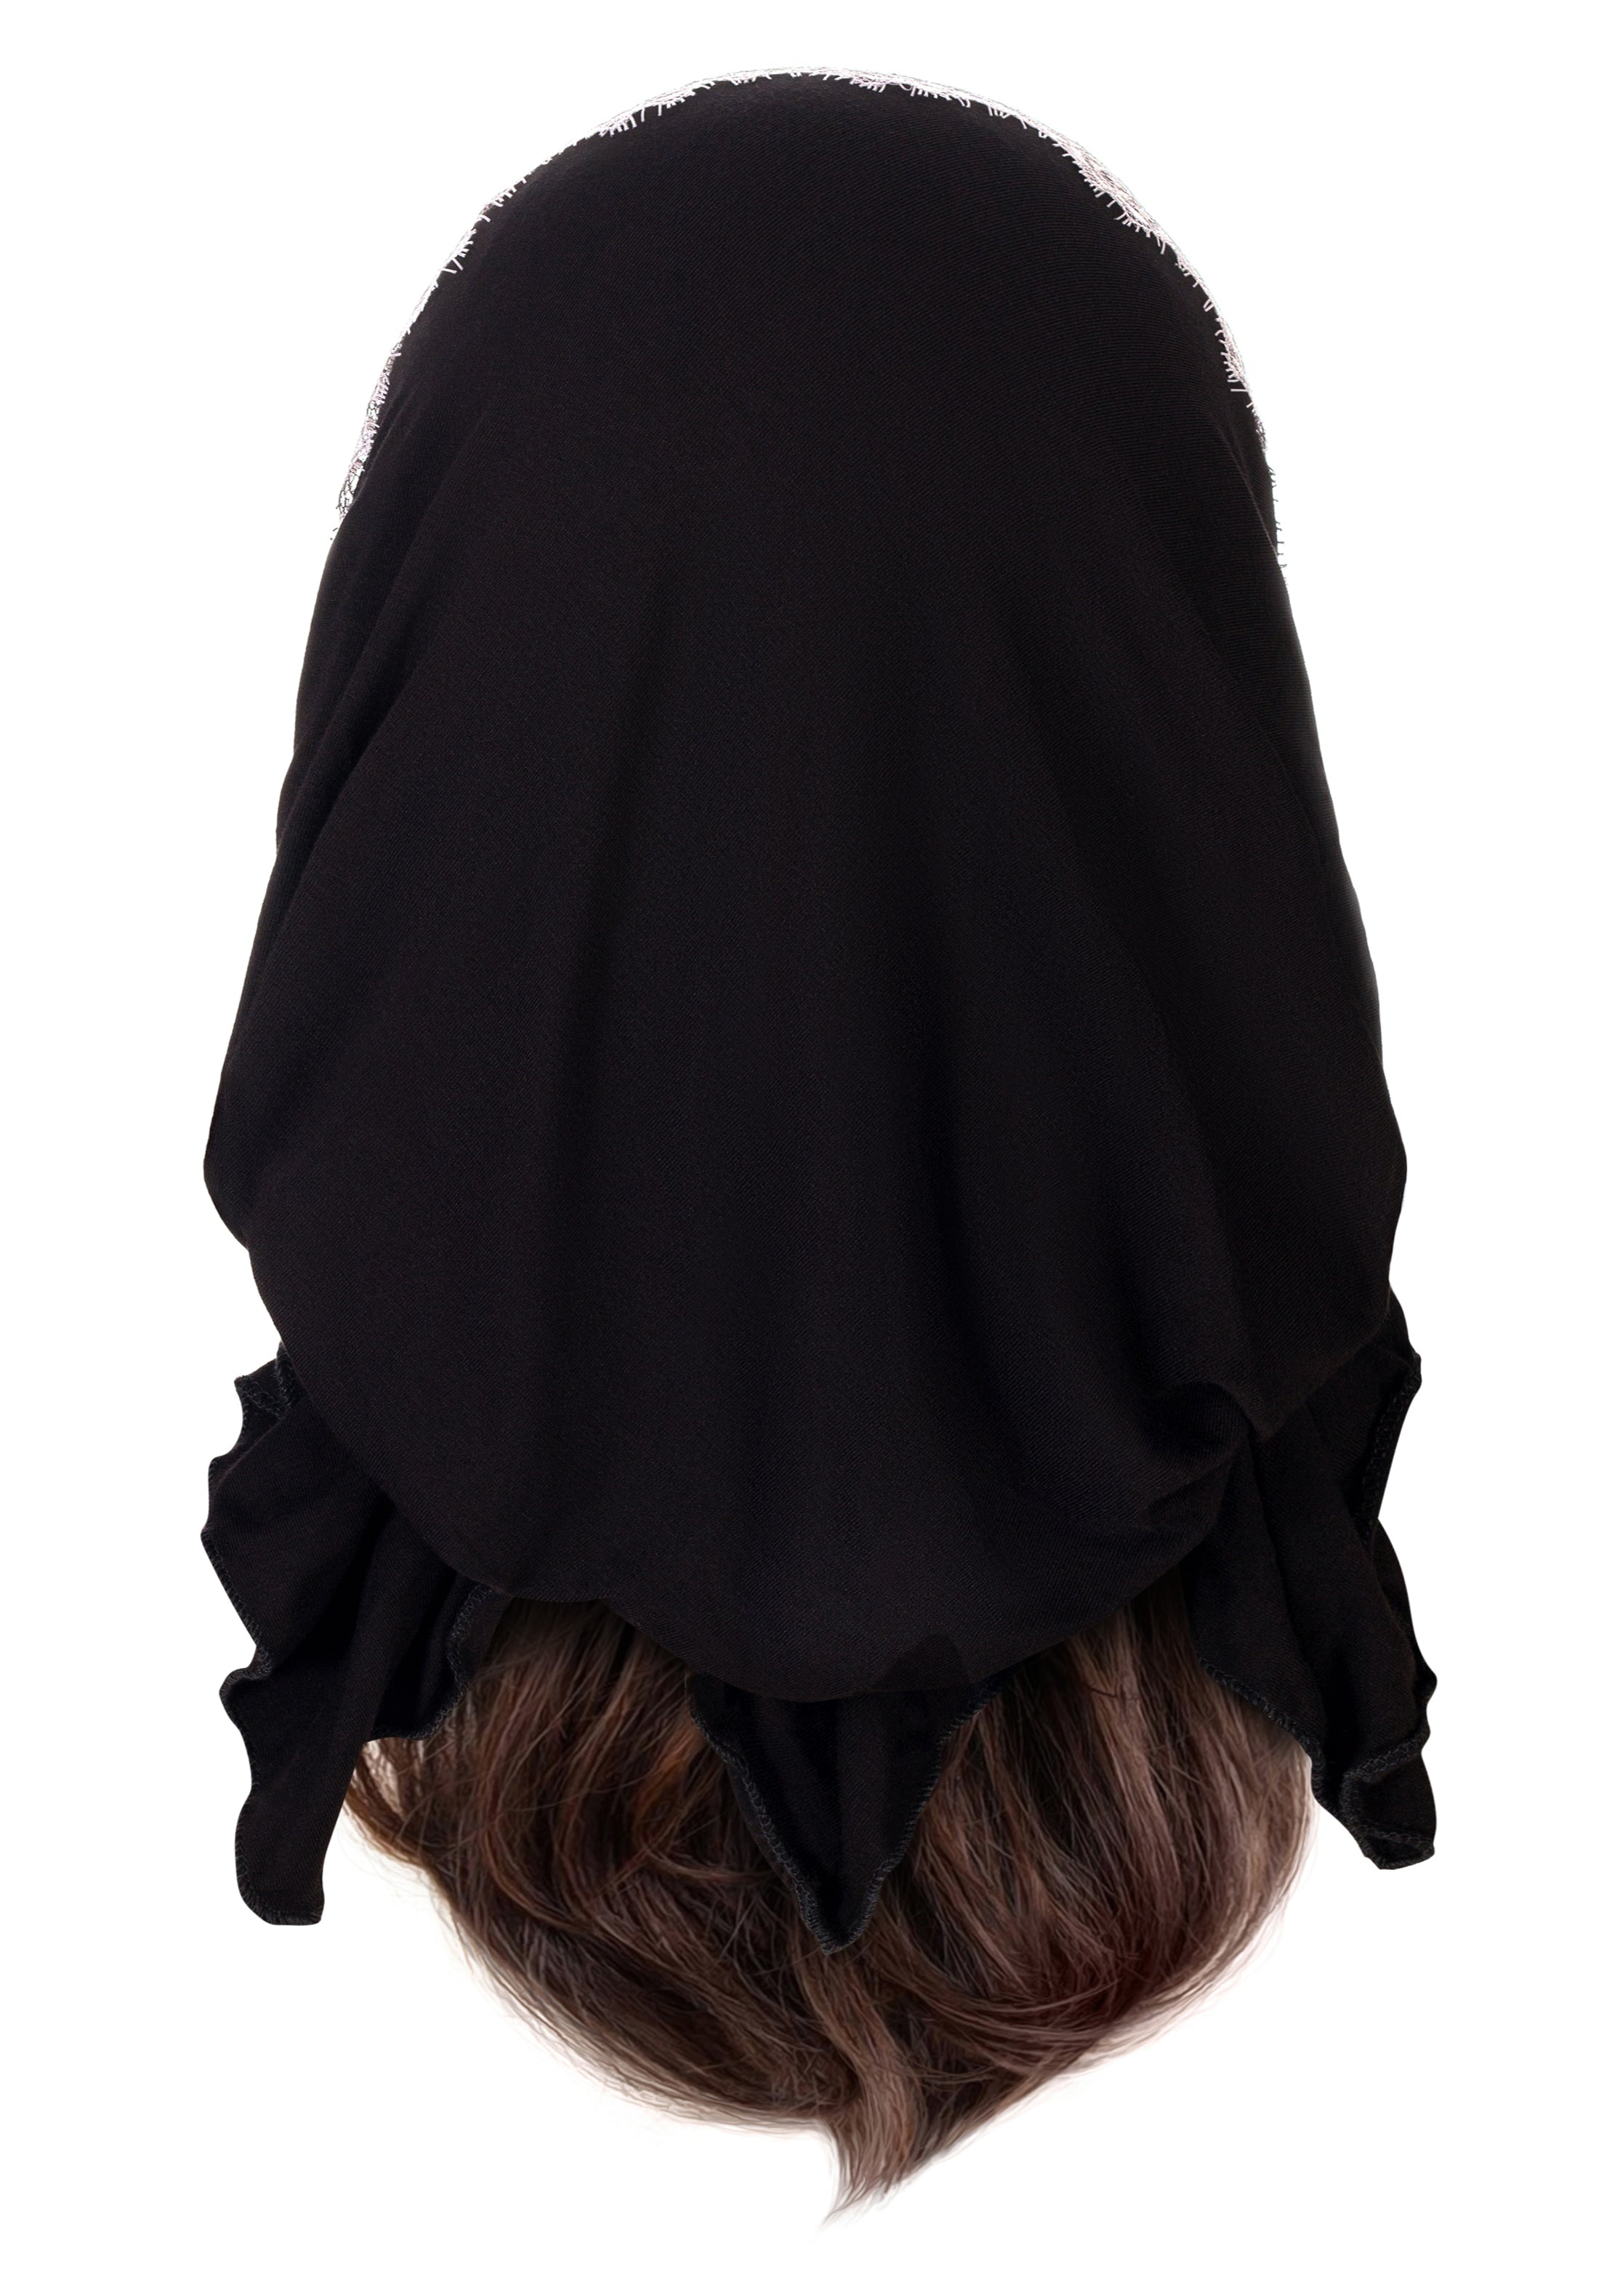 Black headscarf gray boho lace